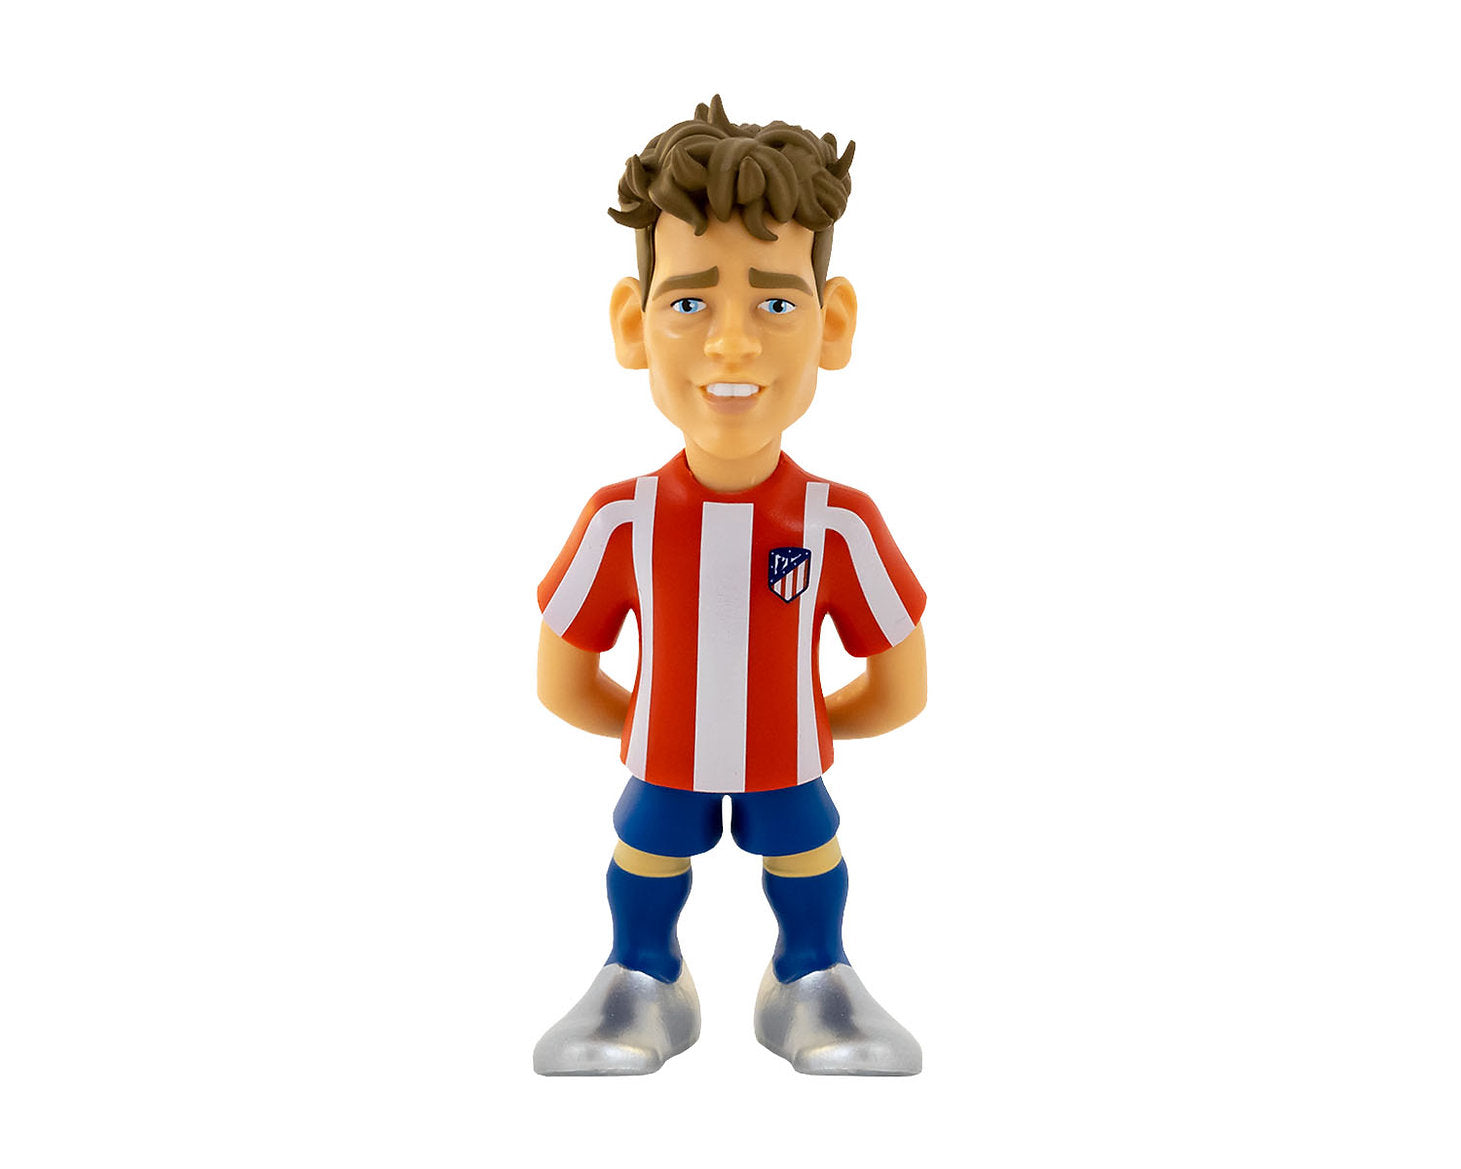 Minix -Football -ATLETICO MADRID -8 ANTOINE GRIEZMANN -Figurine -12 cm